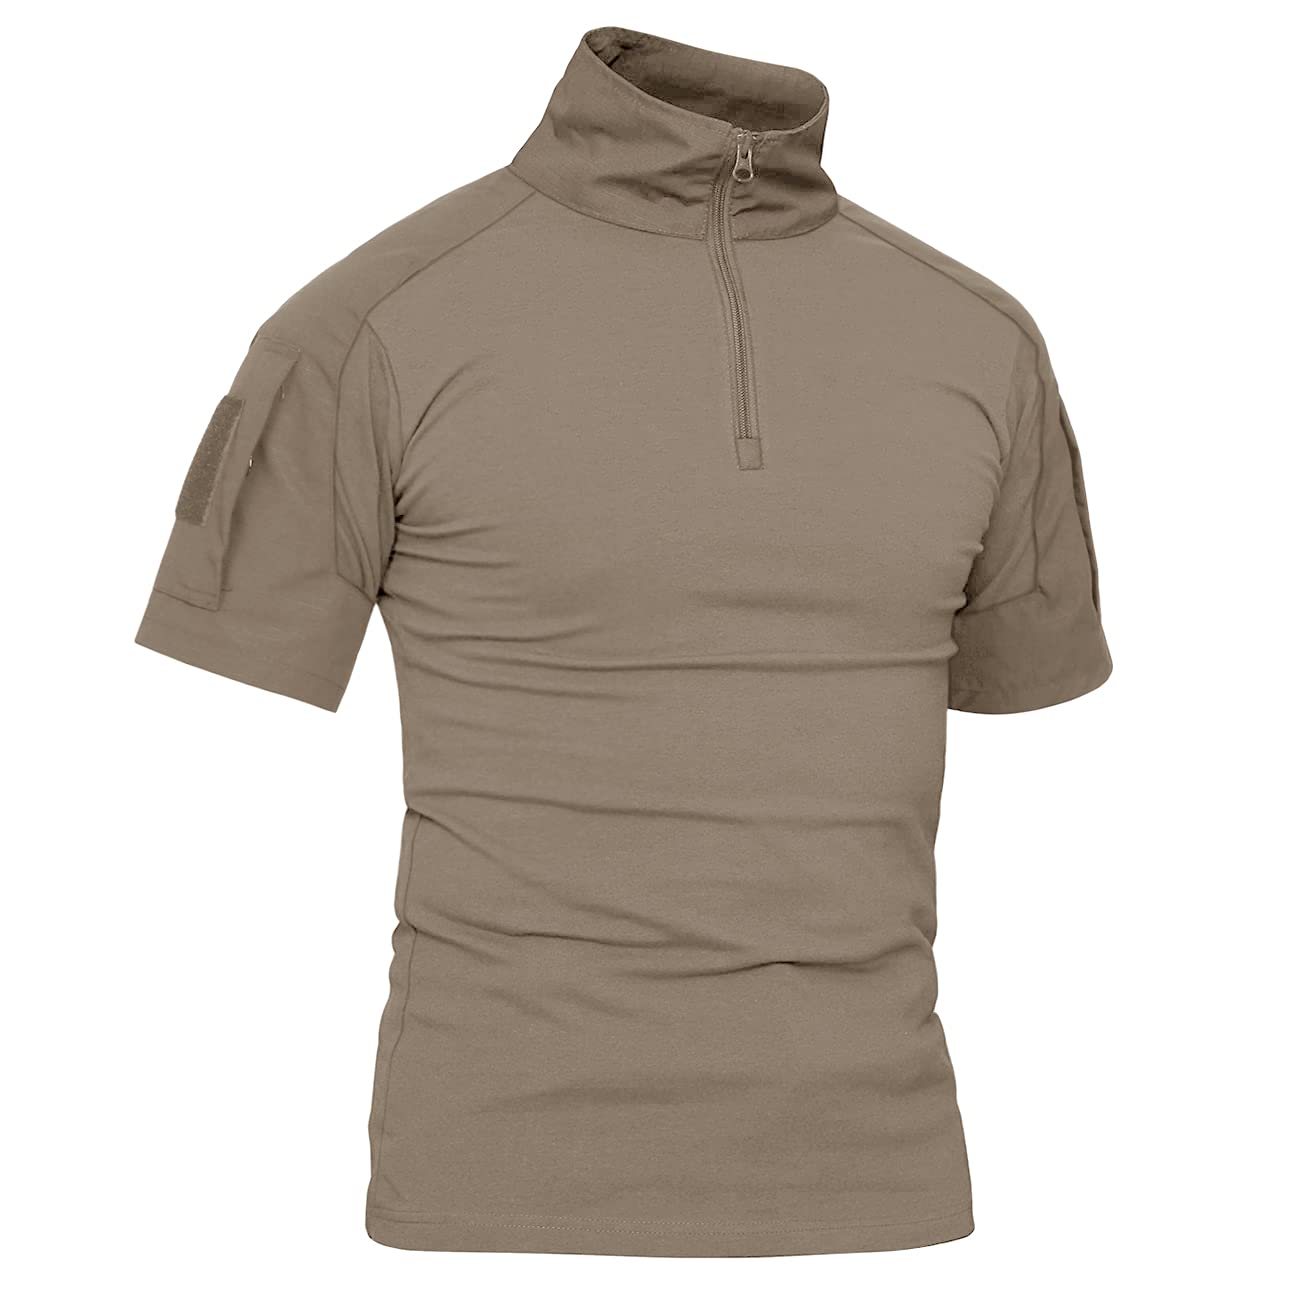 KEFITEVD Military Shirt Männer Army Oberteil Combat Hemd Baumwolle Sommer Shirt Wandern Fitness Kurzarm T-Shirt Elastisch Slim Fit Khaki S